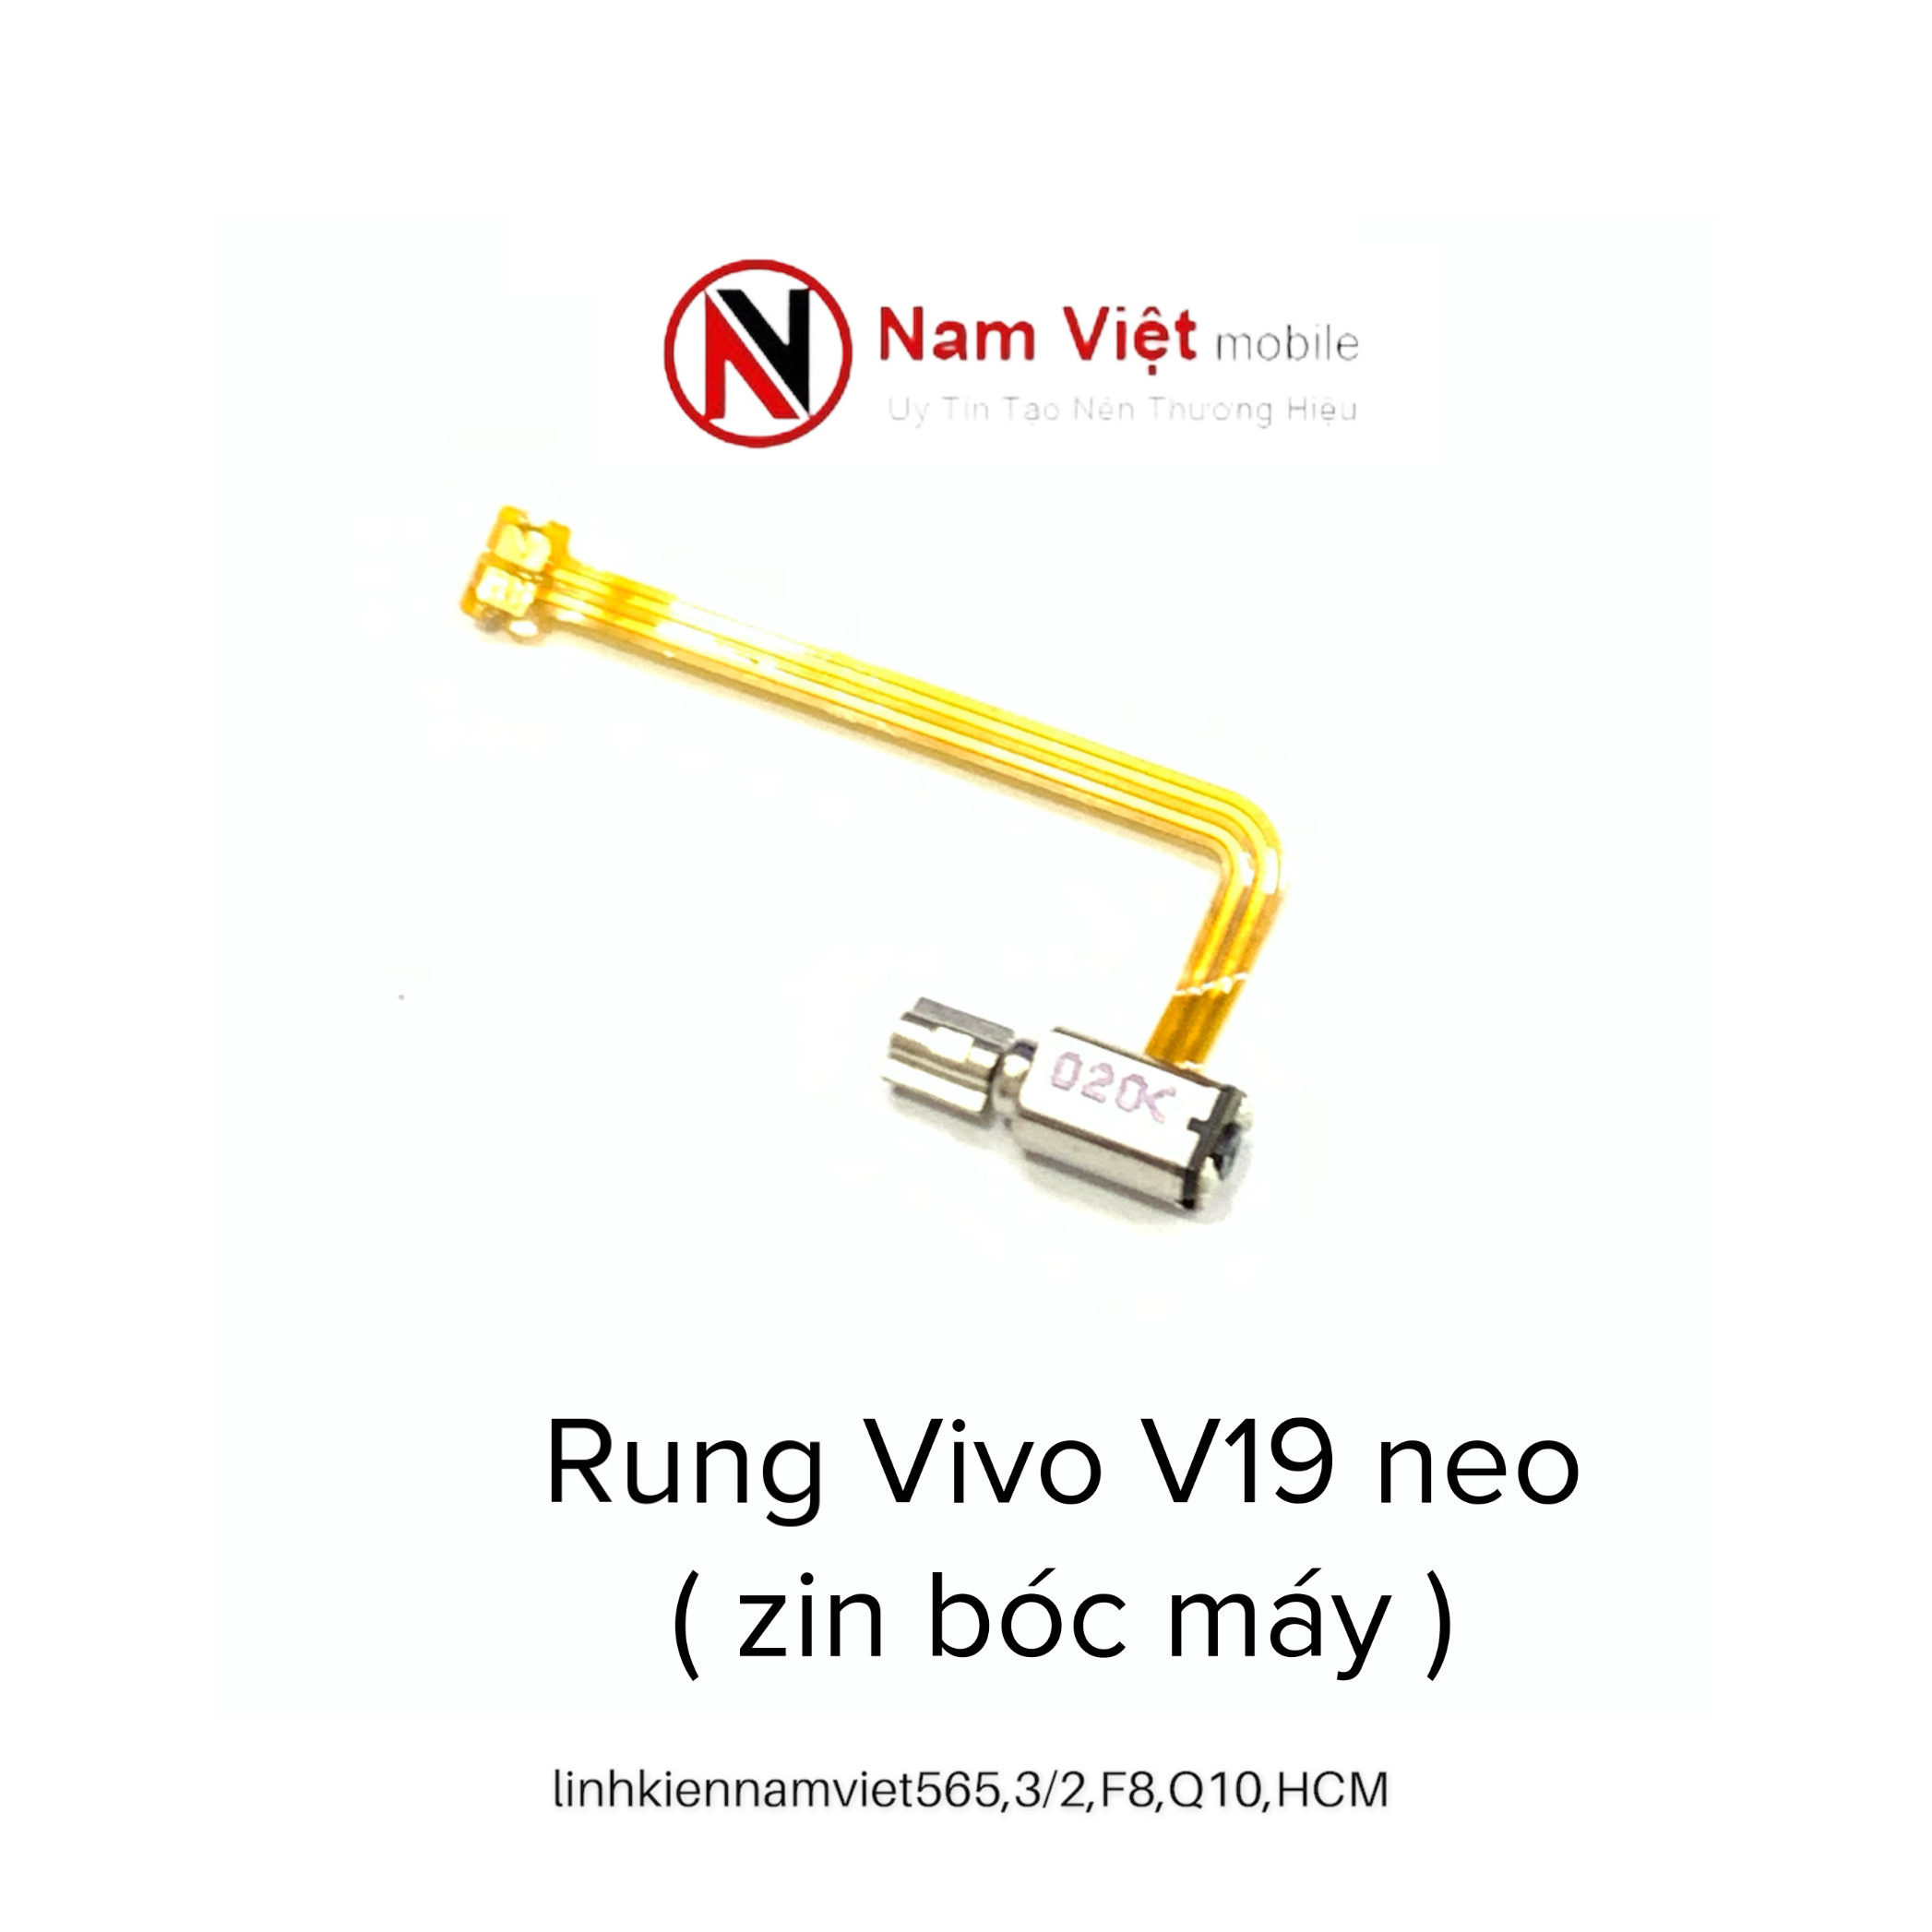 Rung Vivo V19 neo